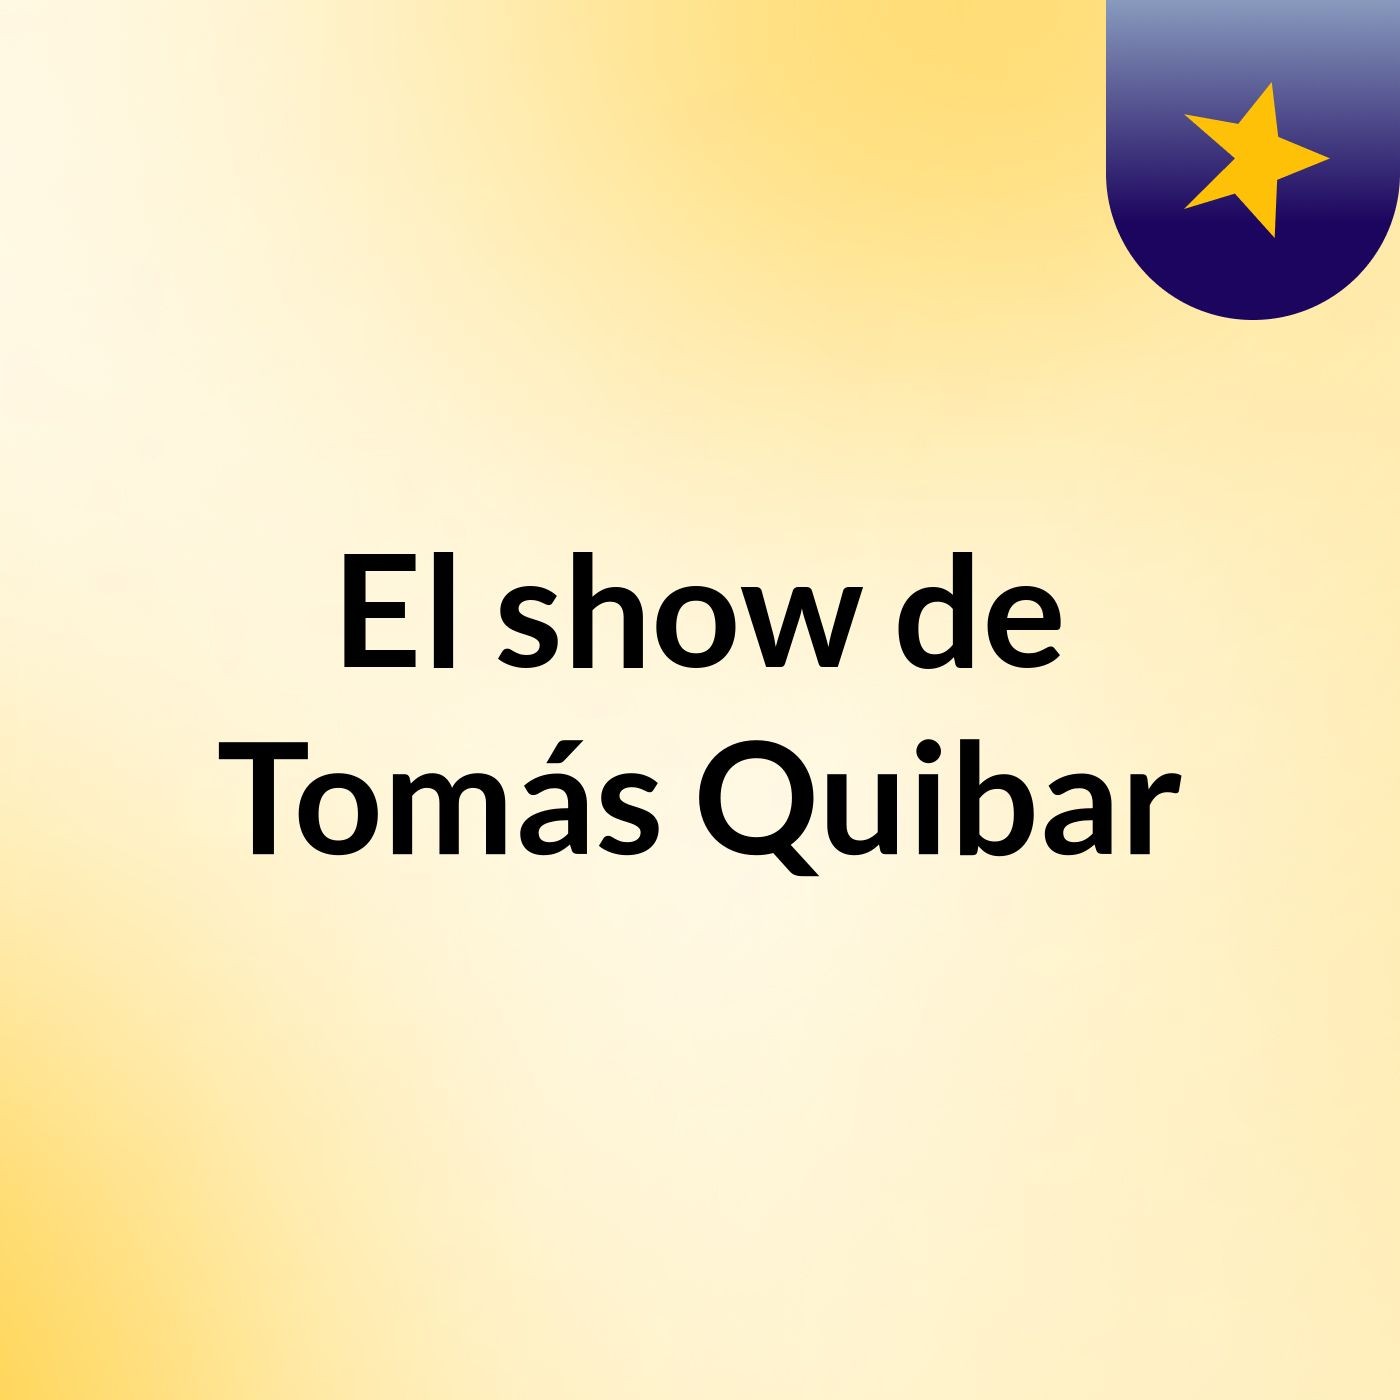 El show de Tomás Quibar